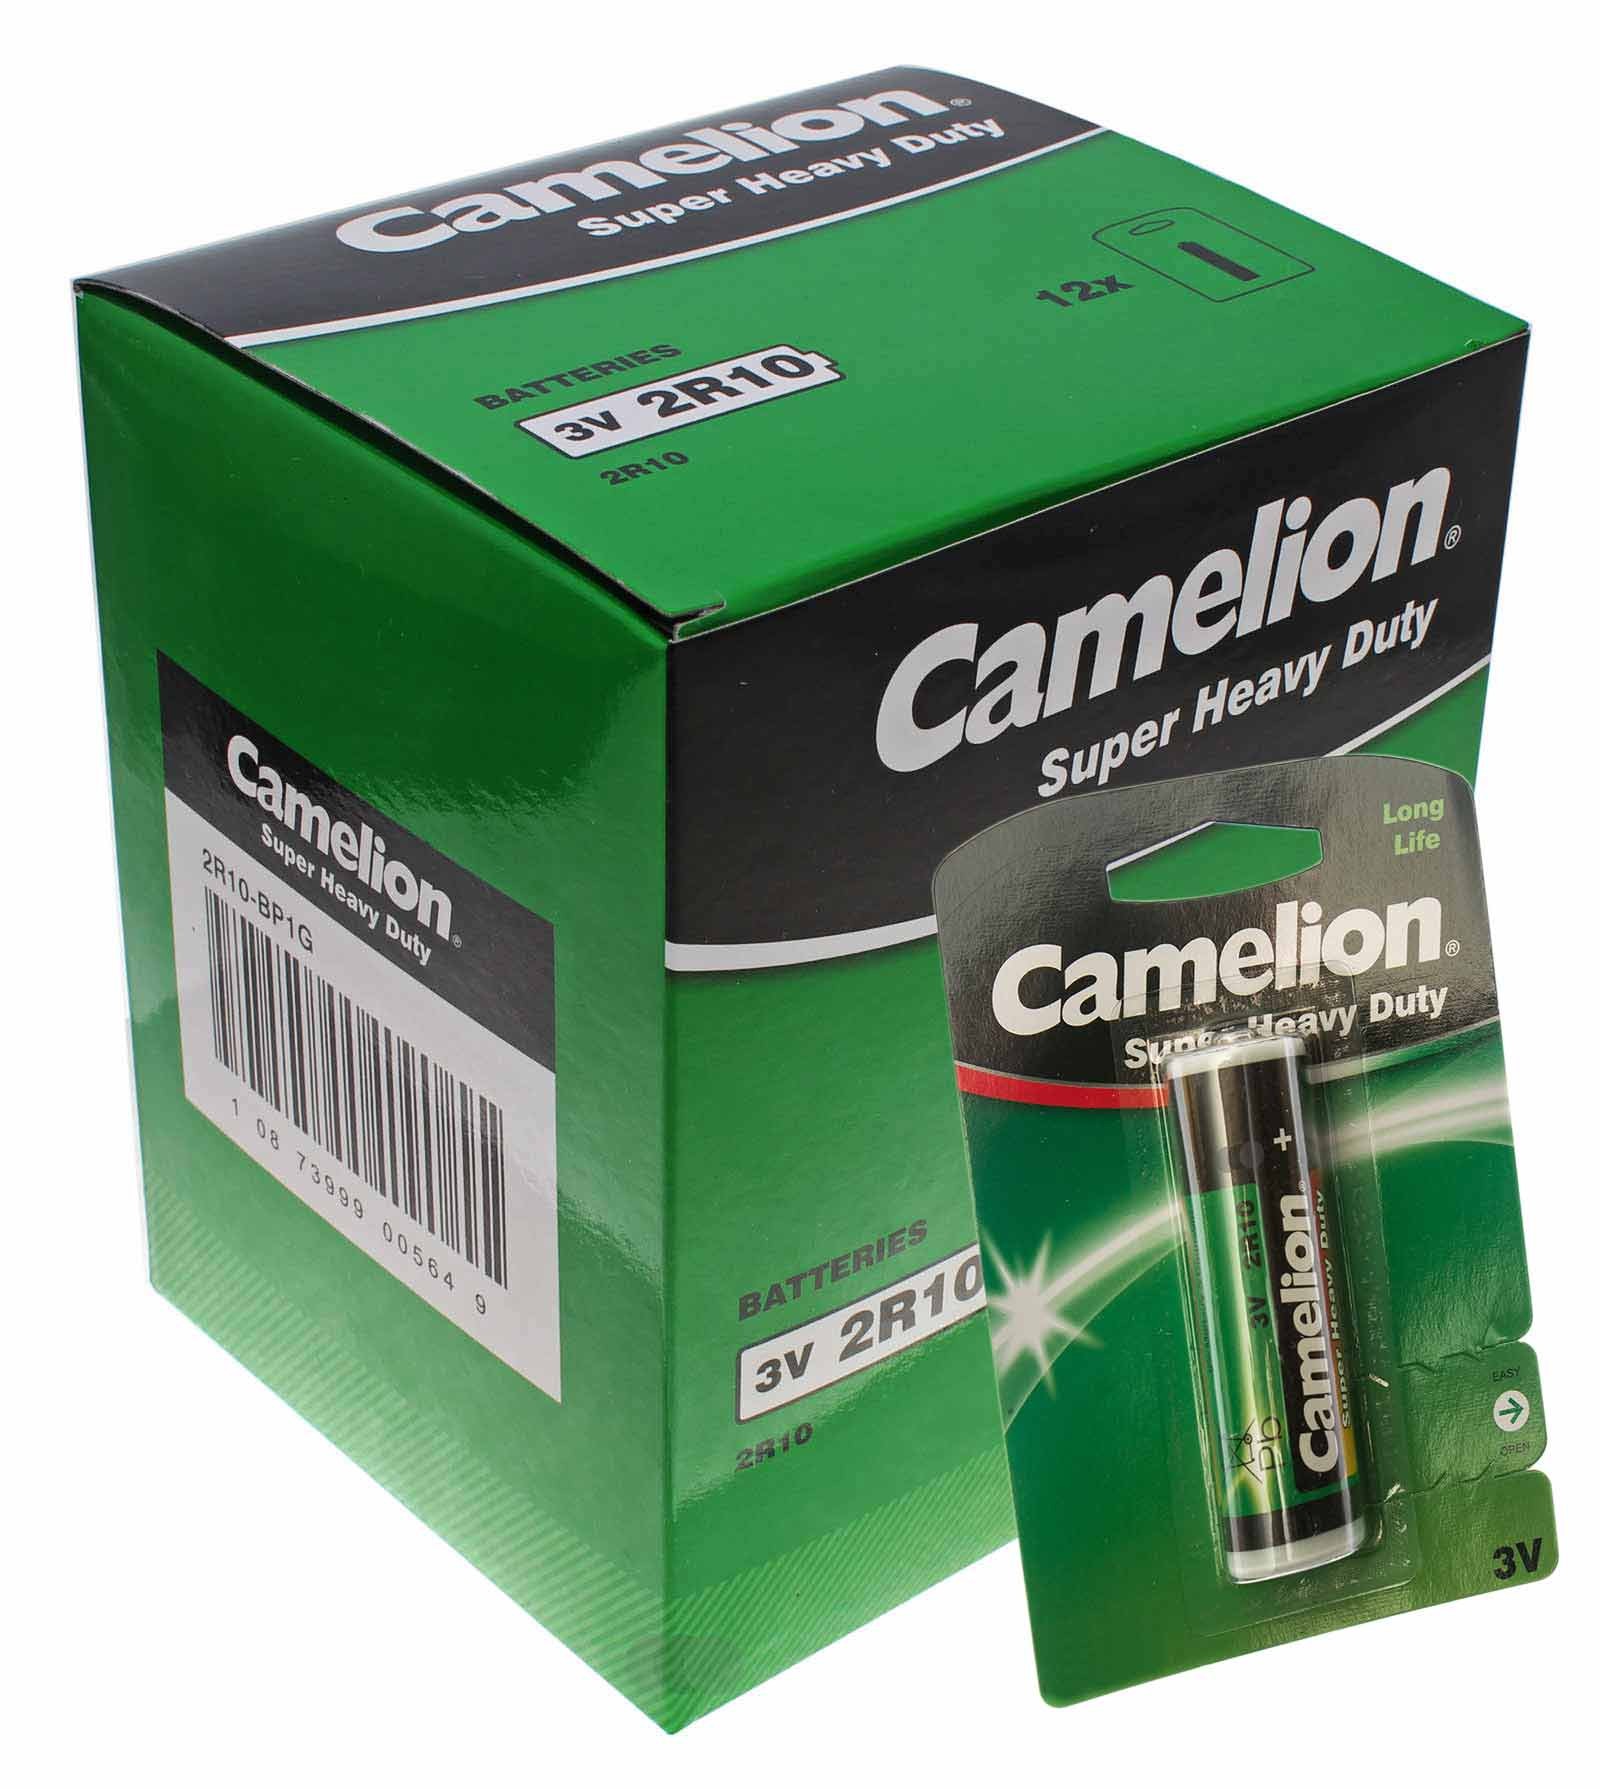 12 Stück - Camelion 2R10 3V Zink-Kohle Stabbatterie